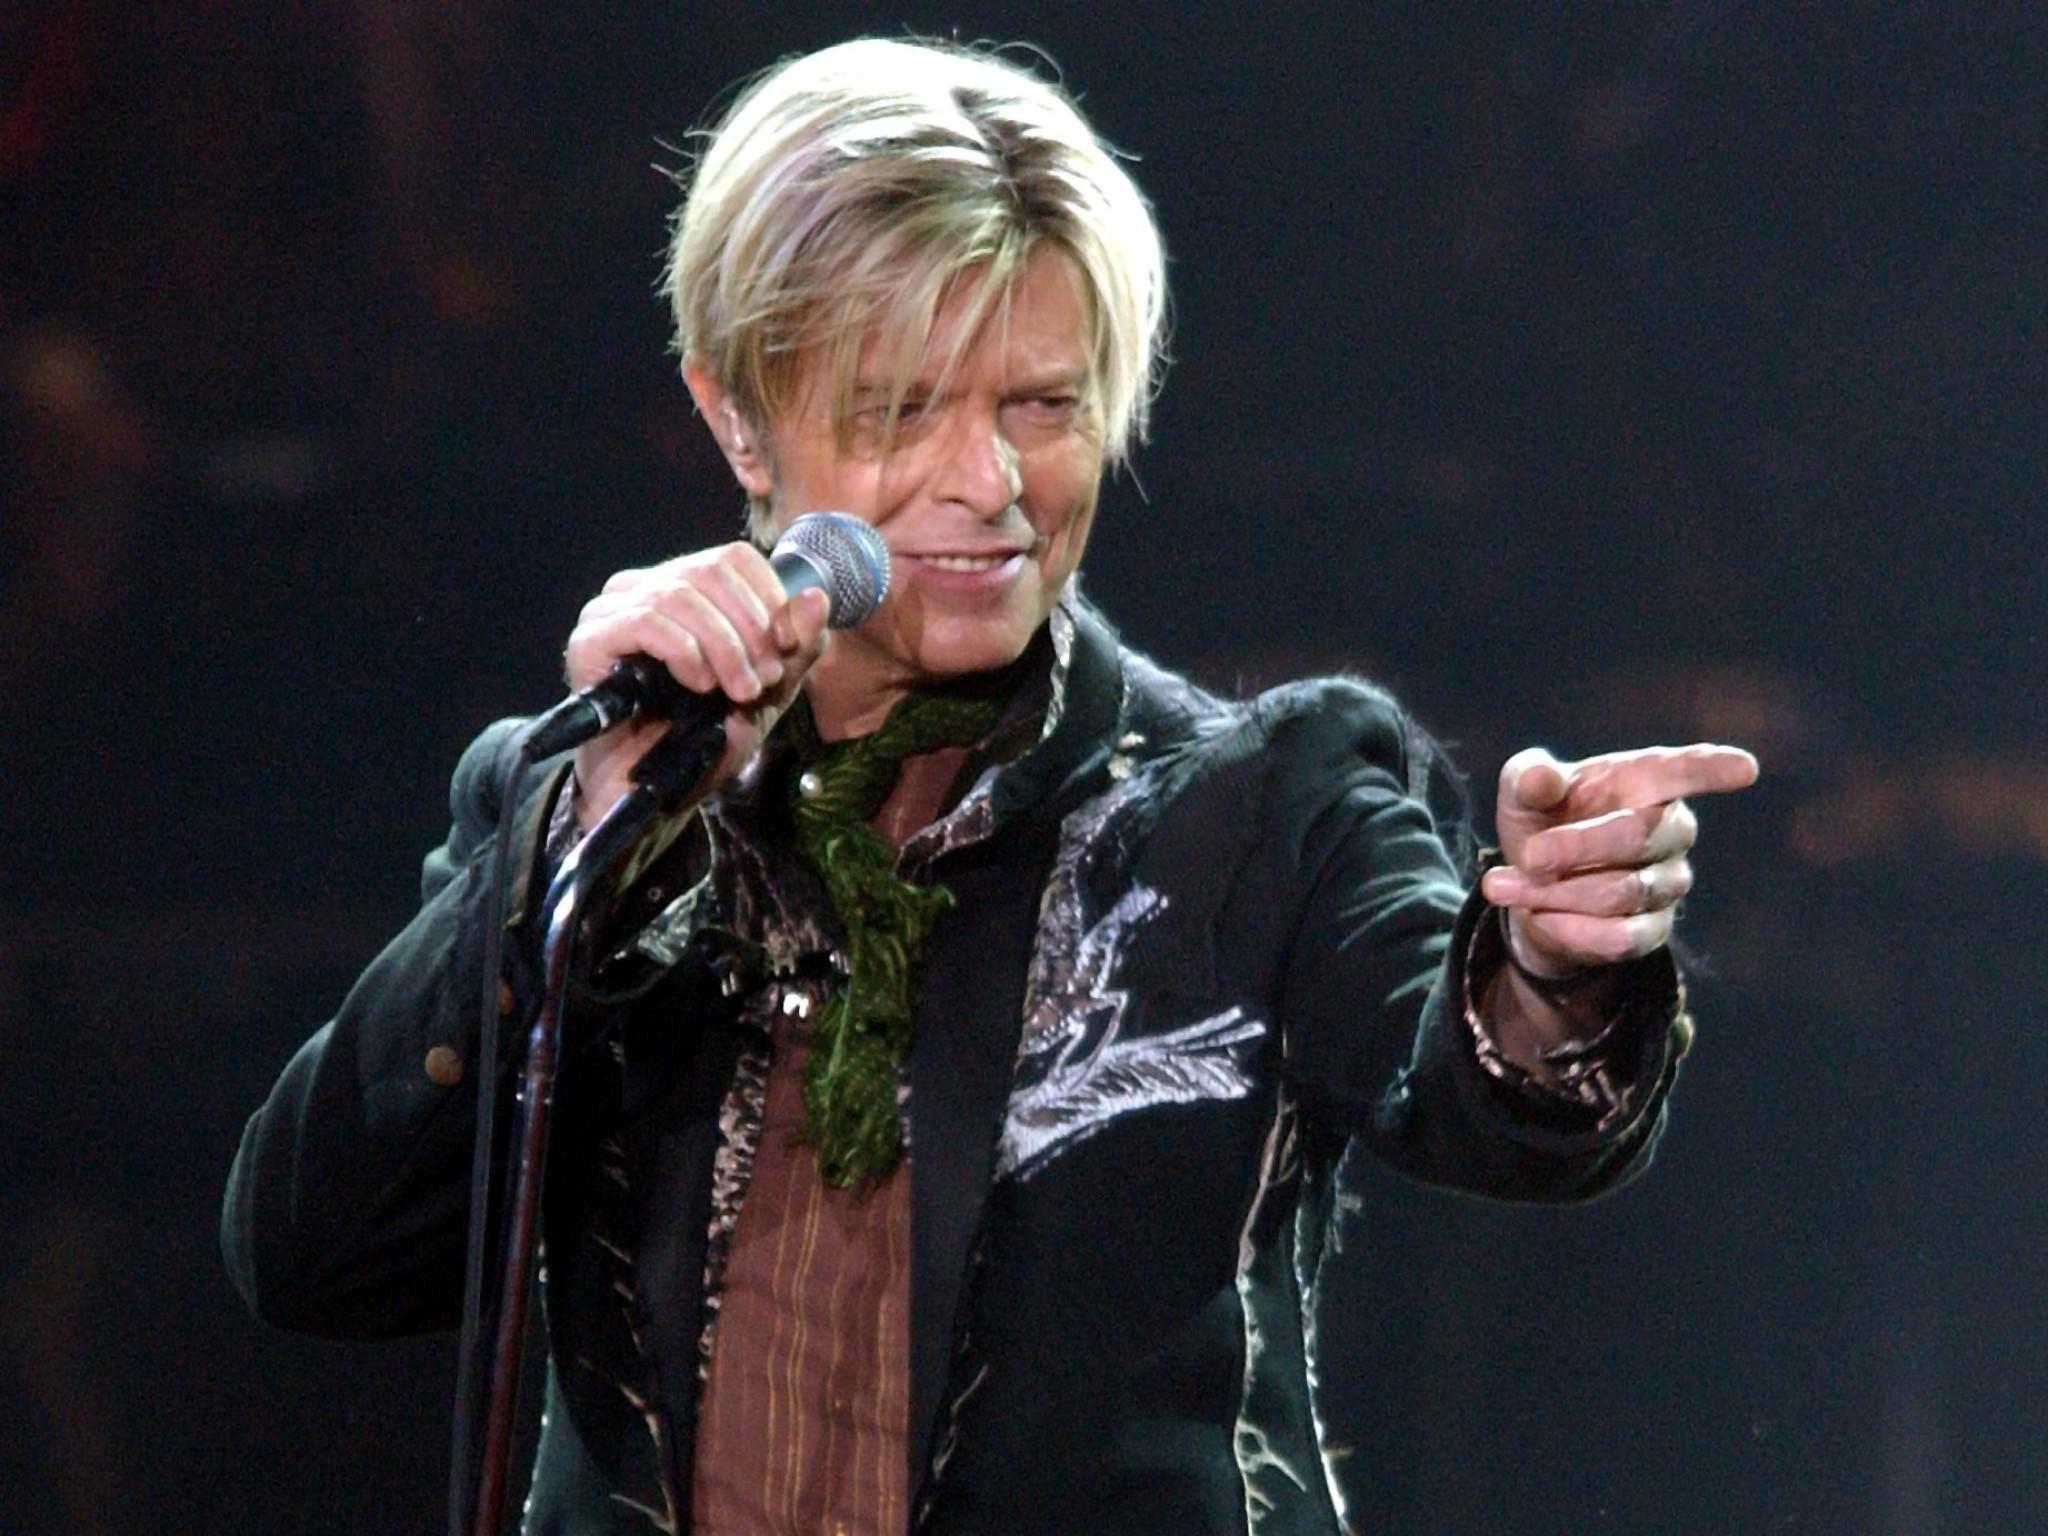 David Bowie tot gestorben Lebenswerk Galerie 